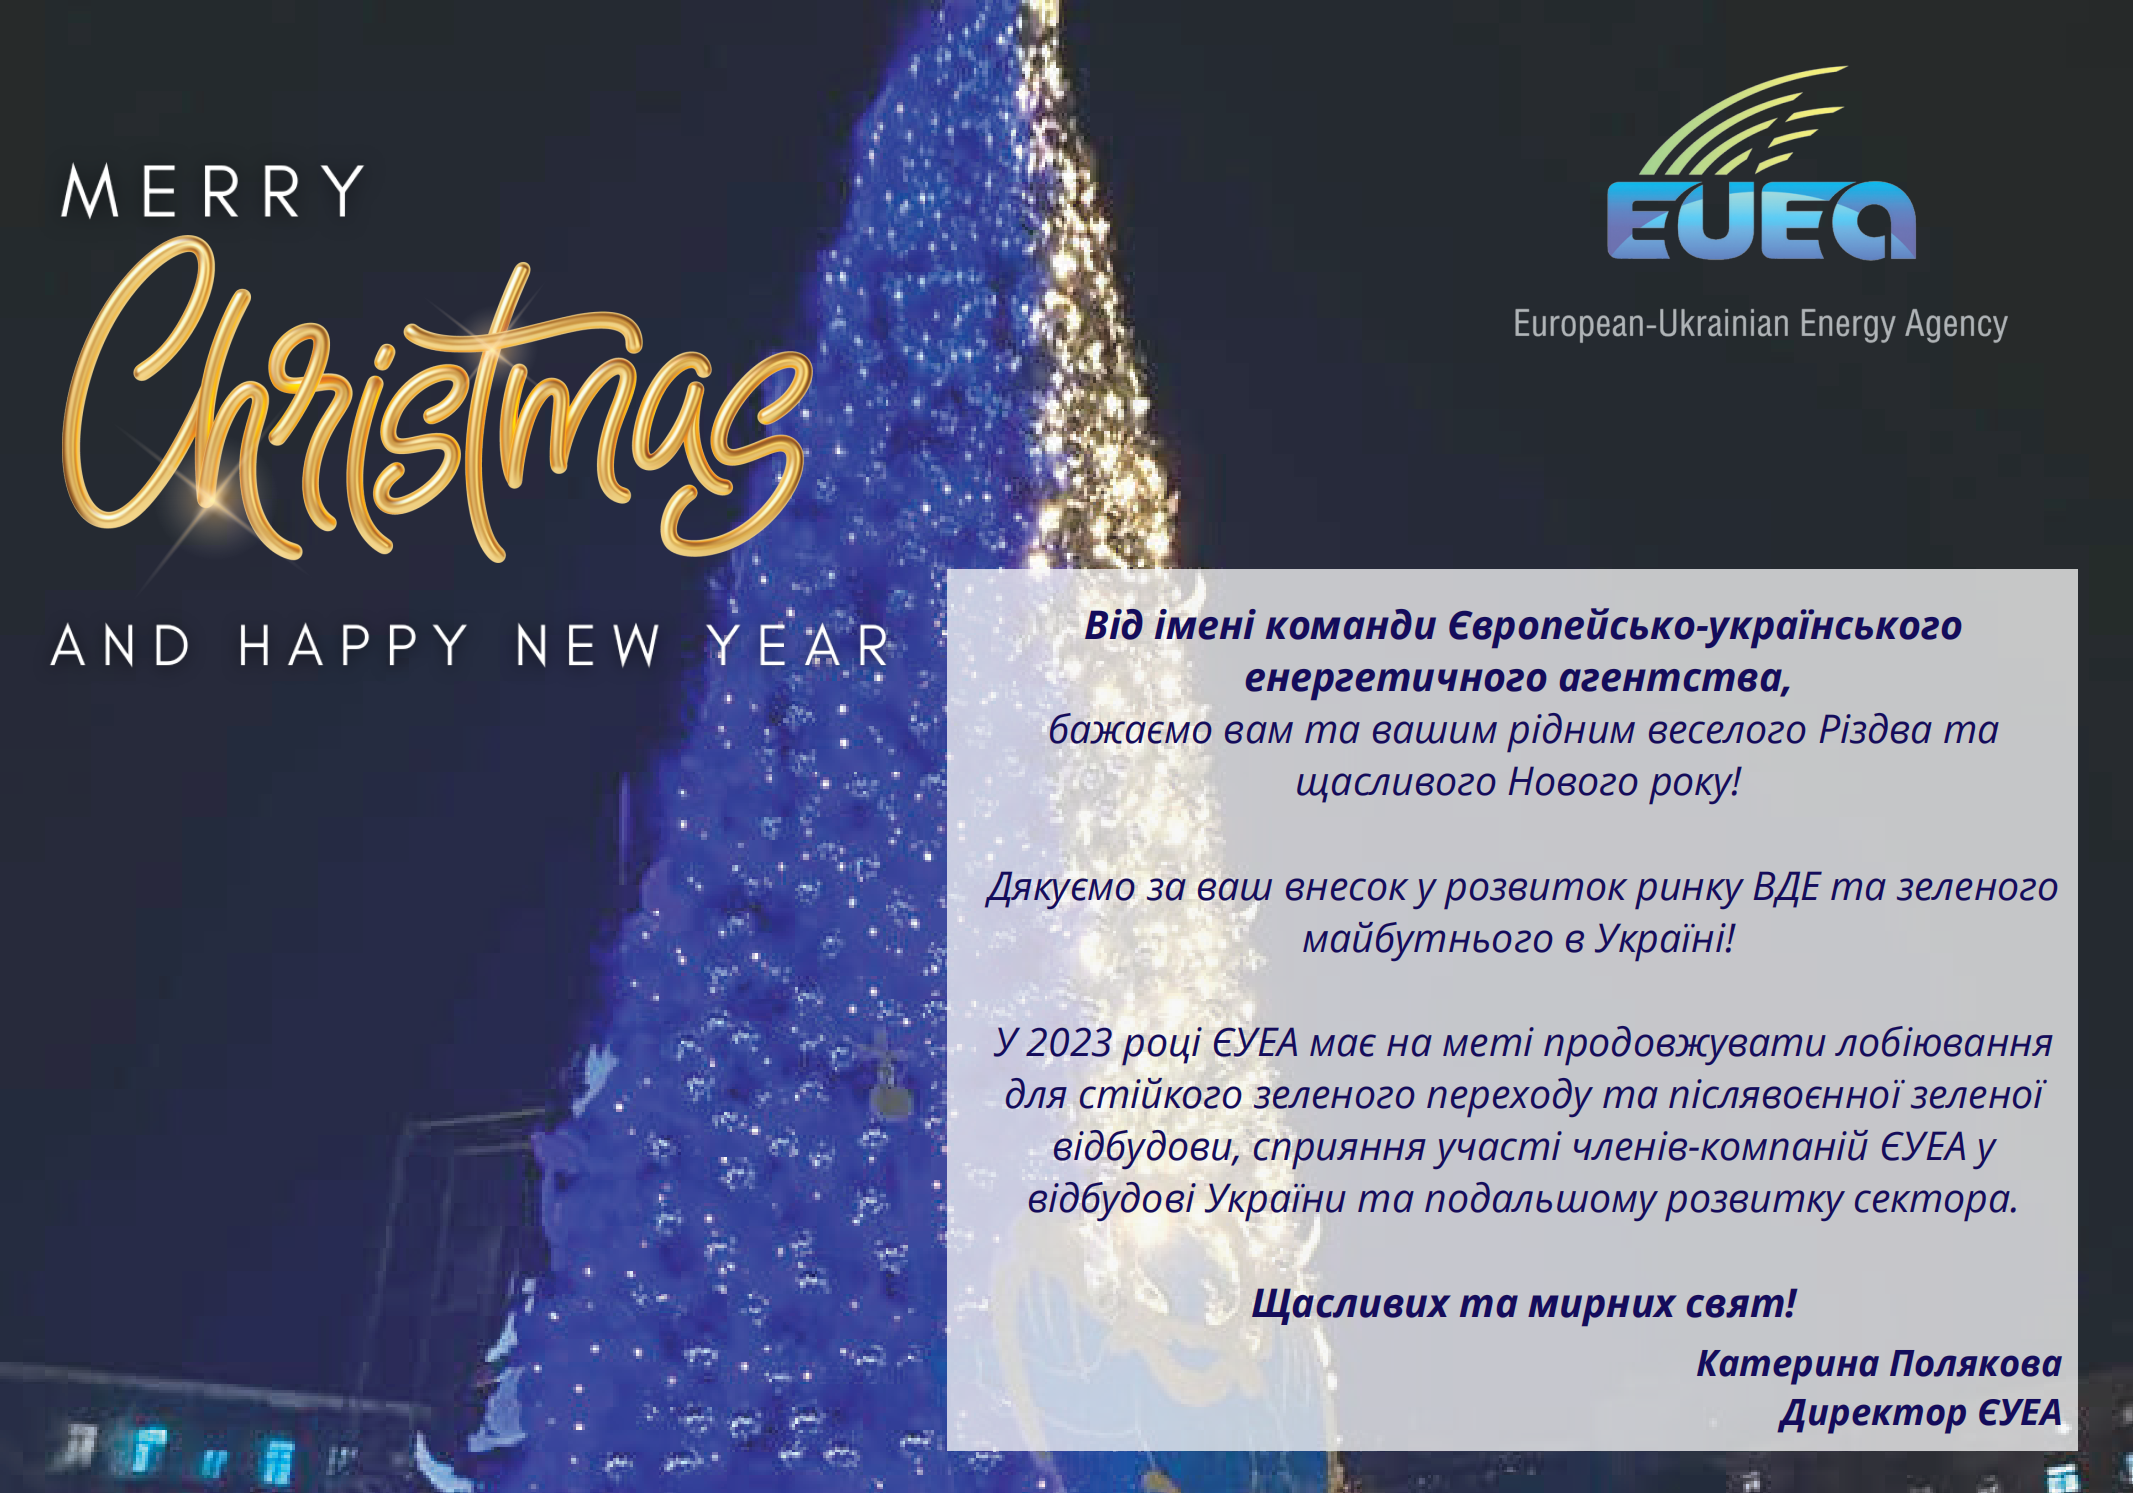 EUEA_New_Year_Card_2022_600_420_px_-_ukr2